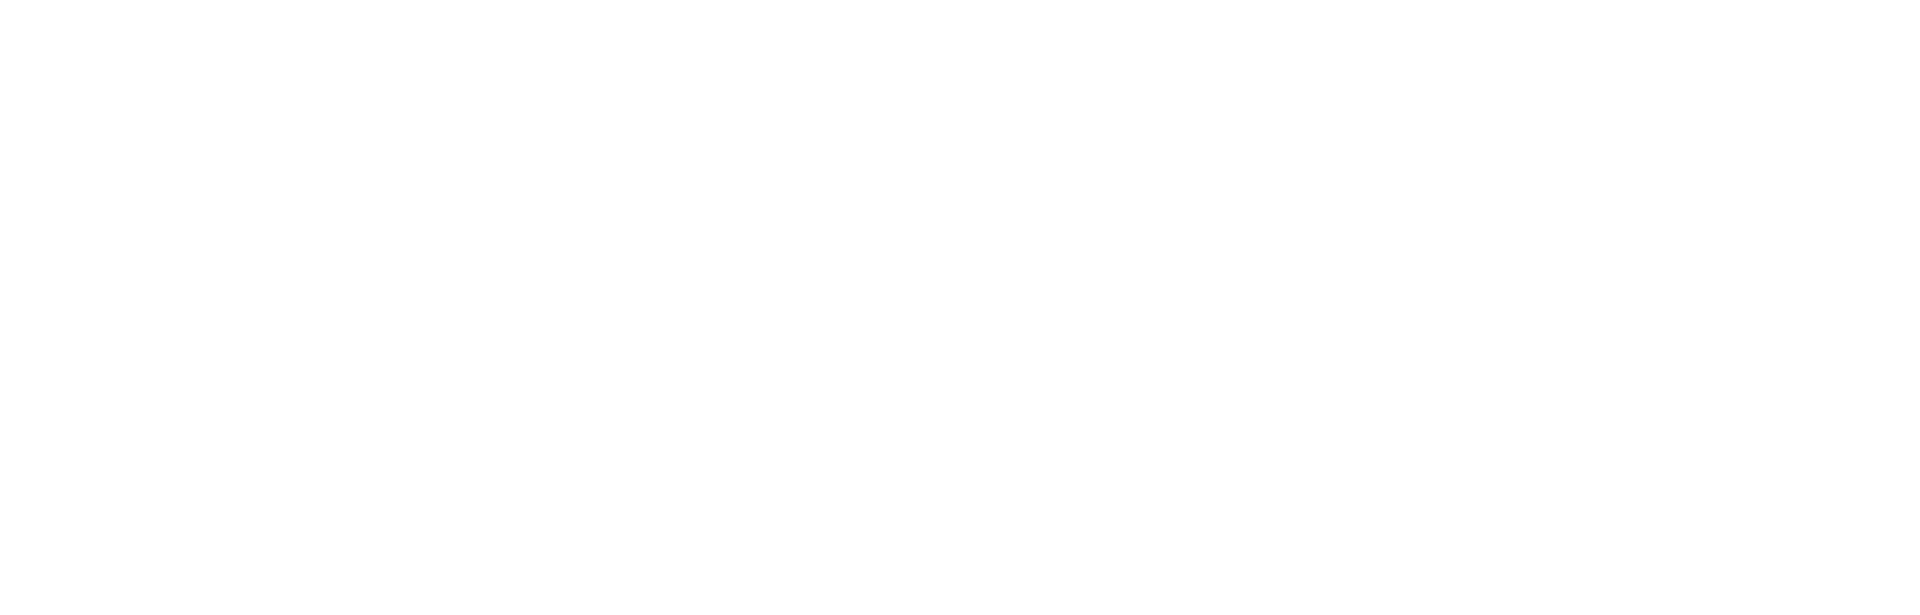 vitaldoc logo weiß